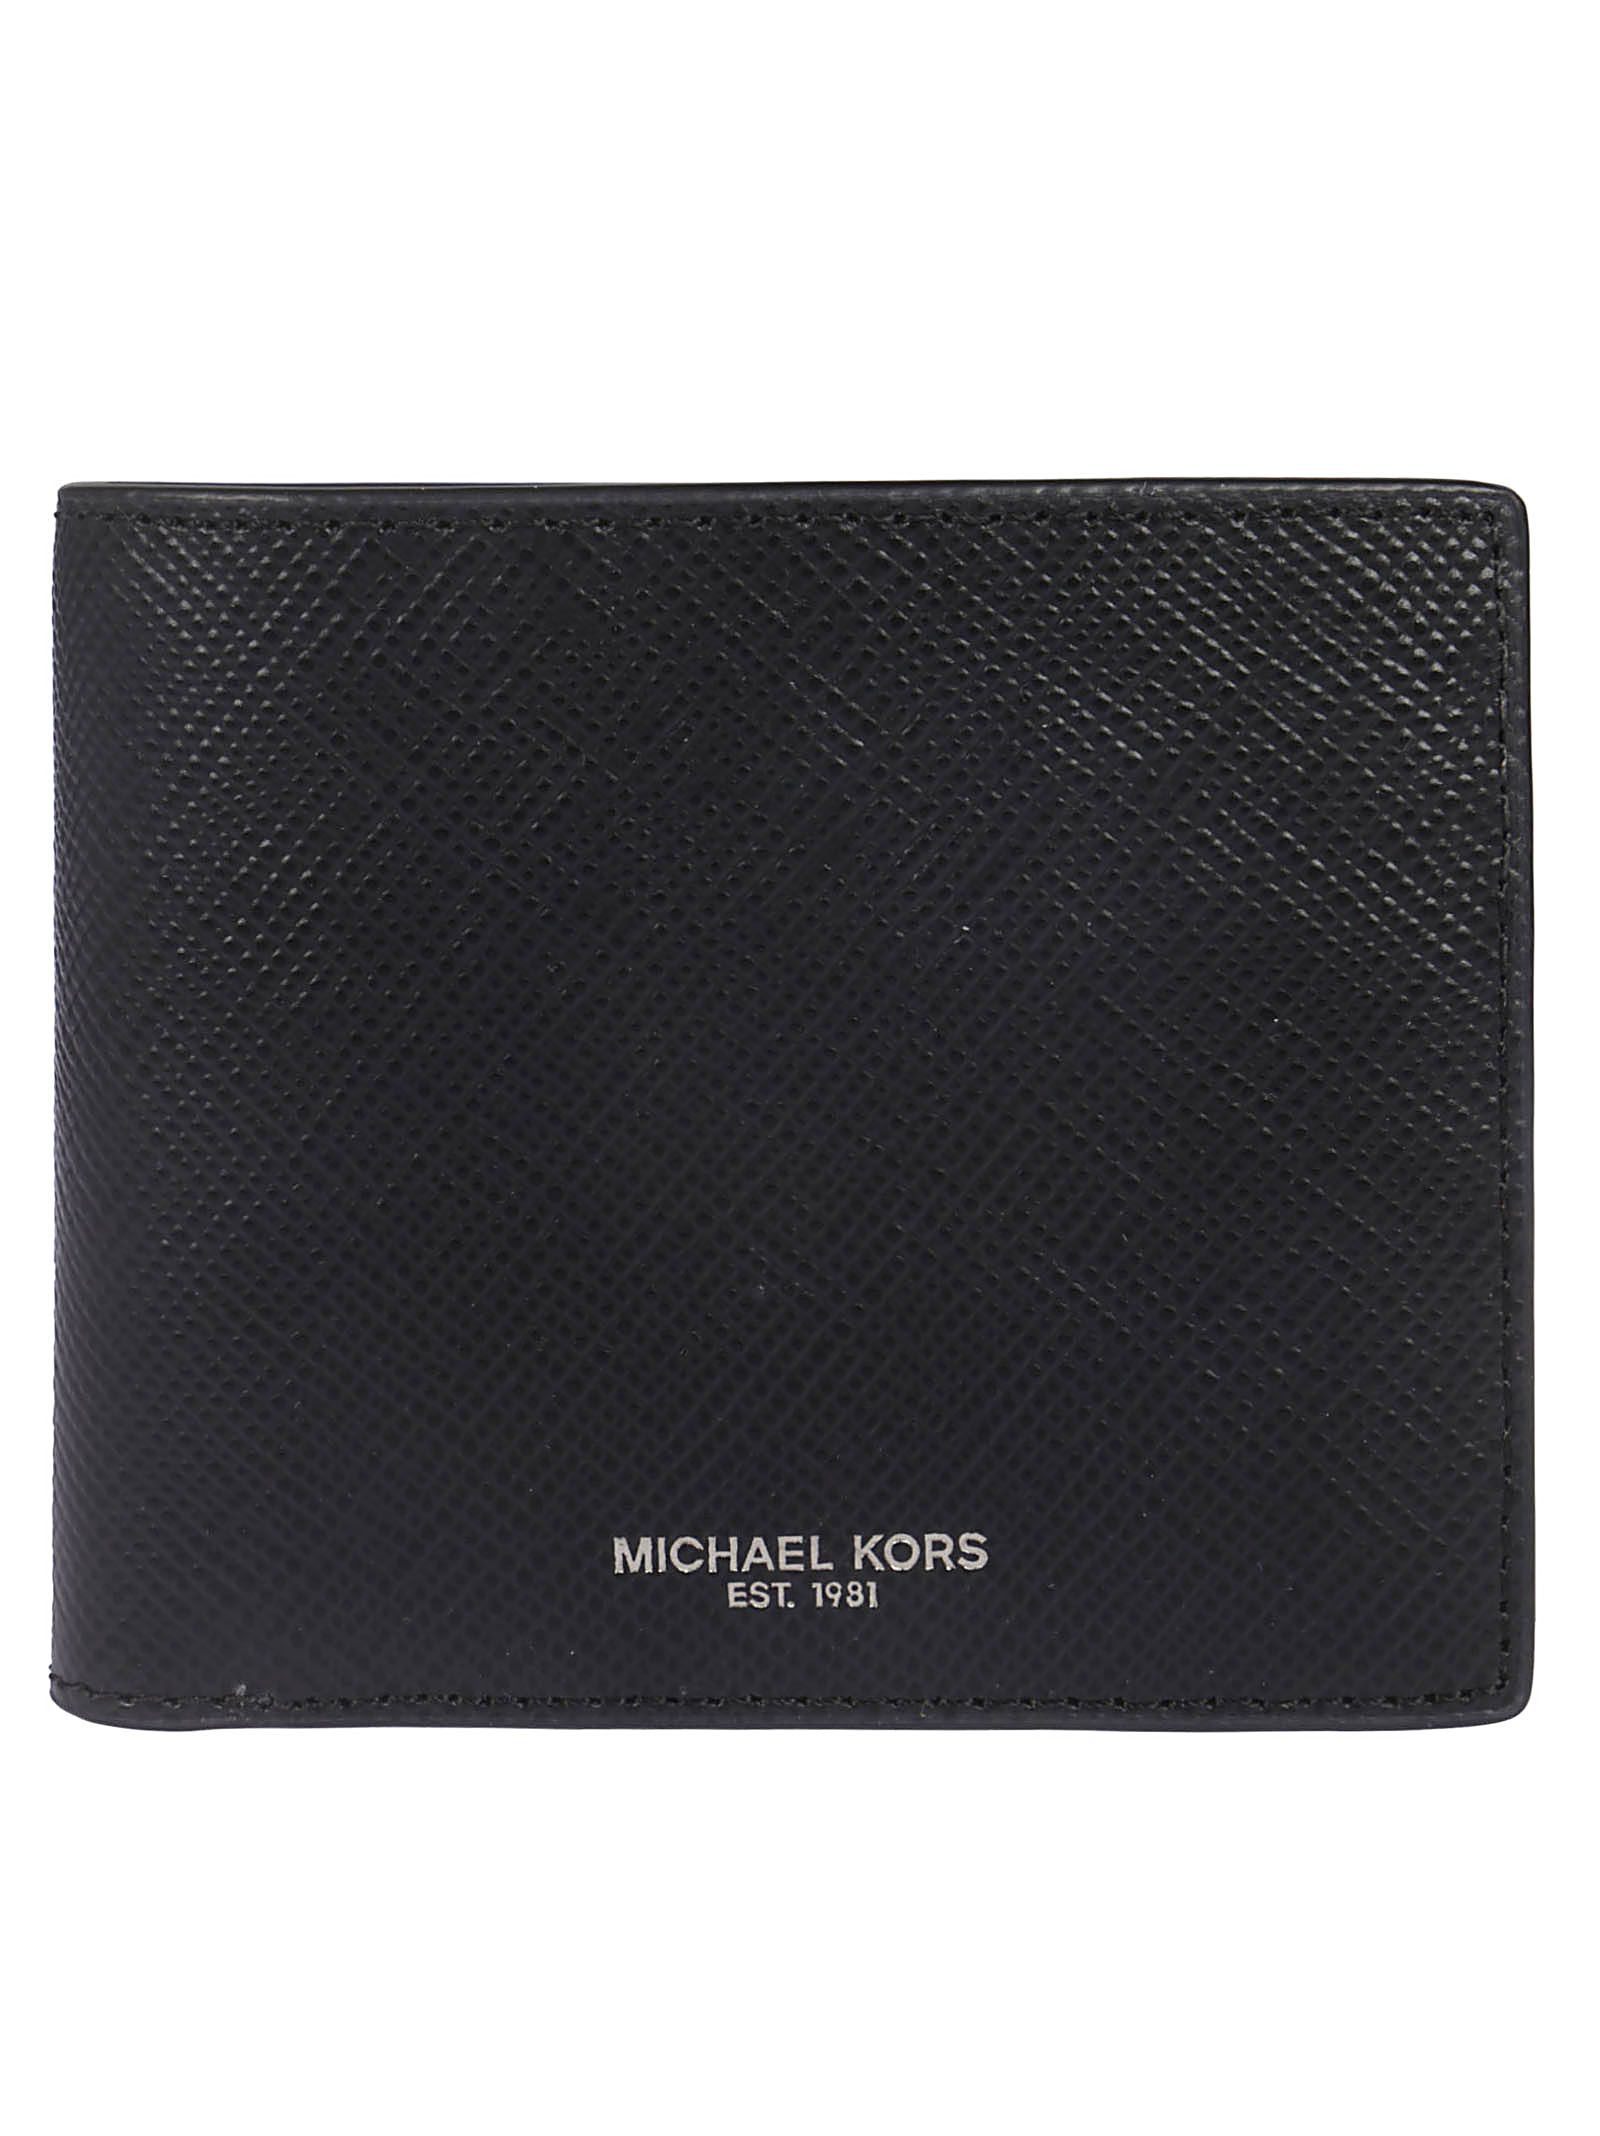 Michael Kors Men's Genuine Leather Wallet Credit Card Bifold Bifold ...